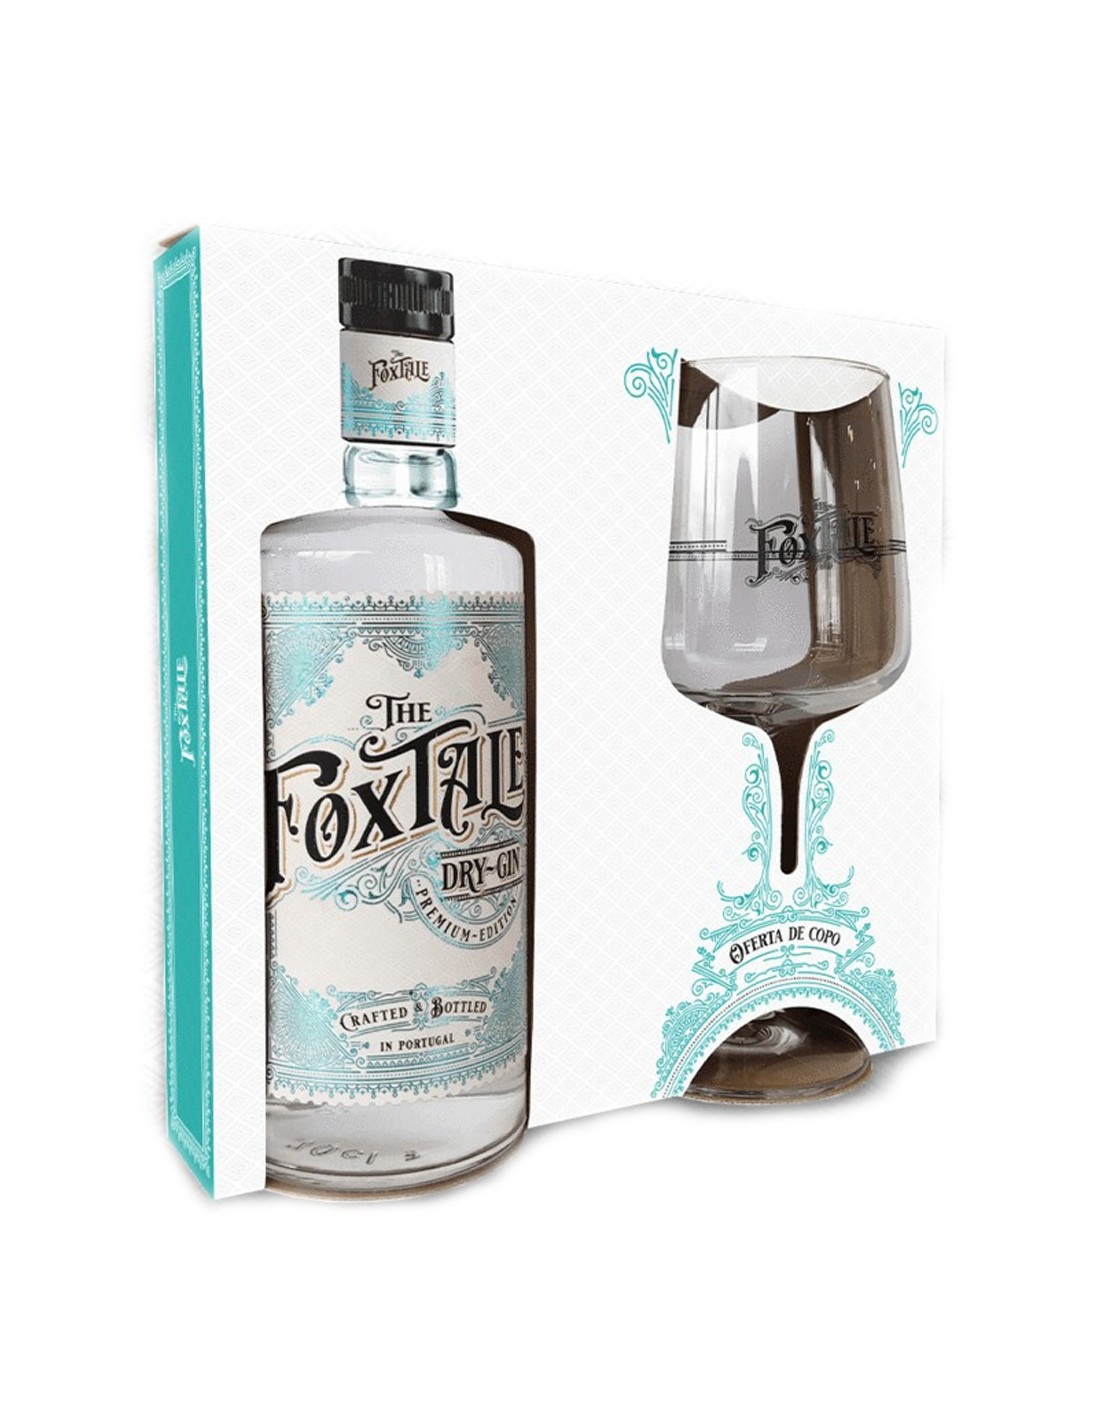 Gin The FoxTale Dry + Pahar, 40% alc., 0.7L, Portugalia alcooldiscount.ro